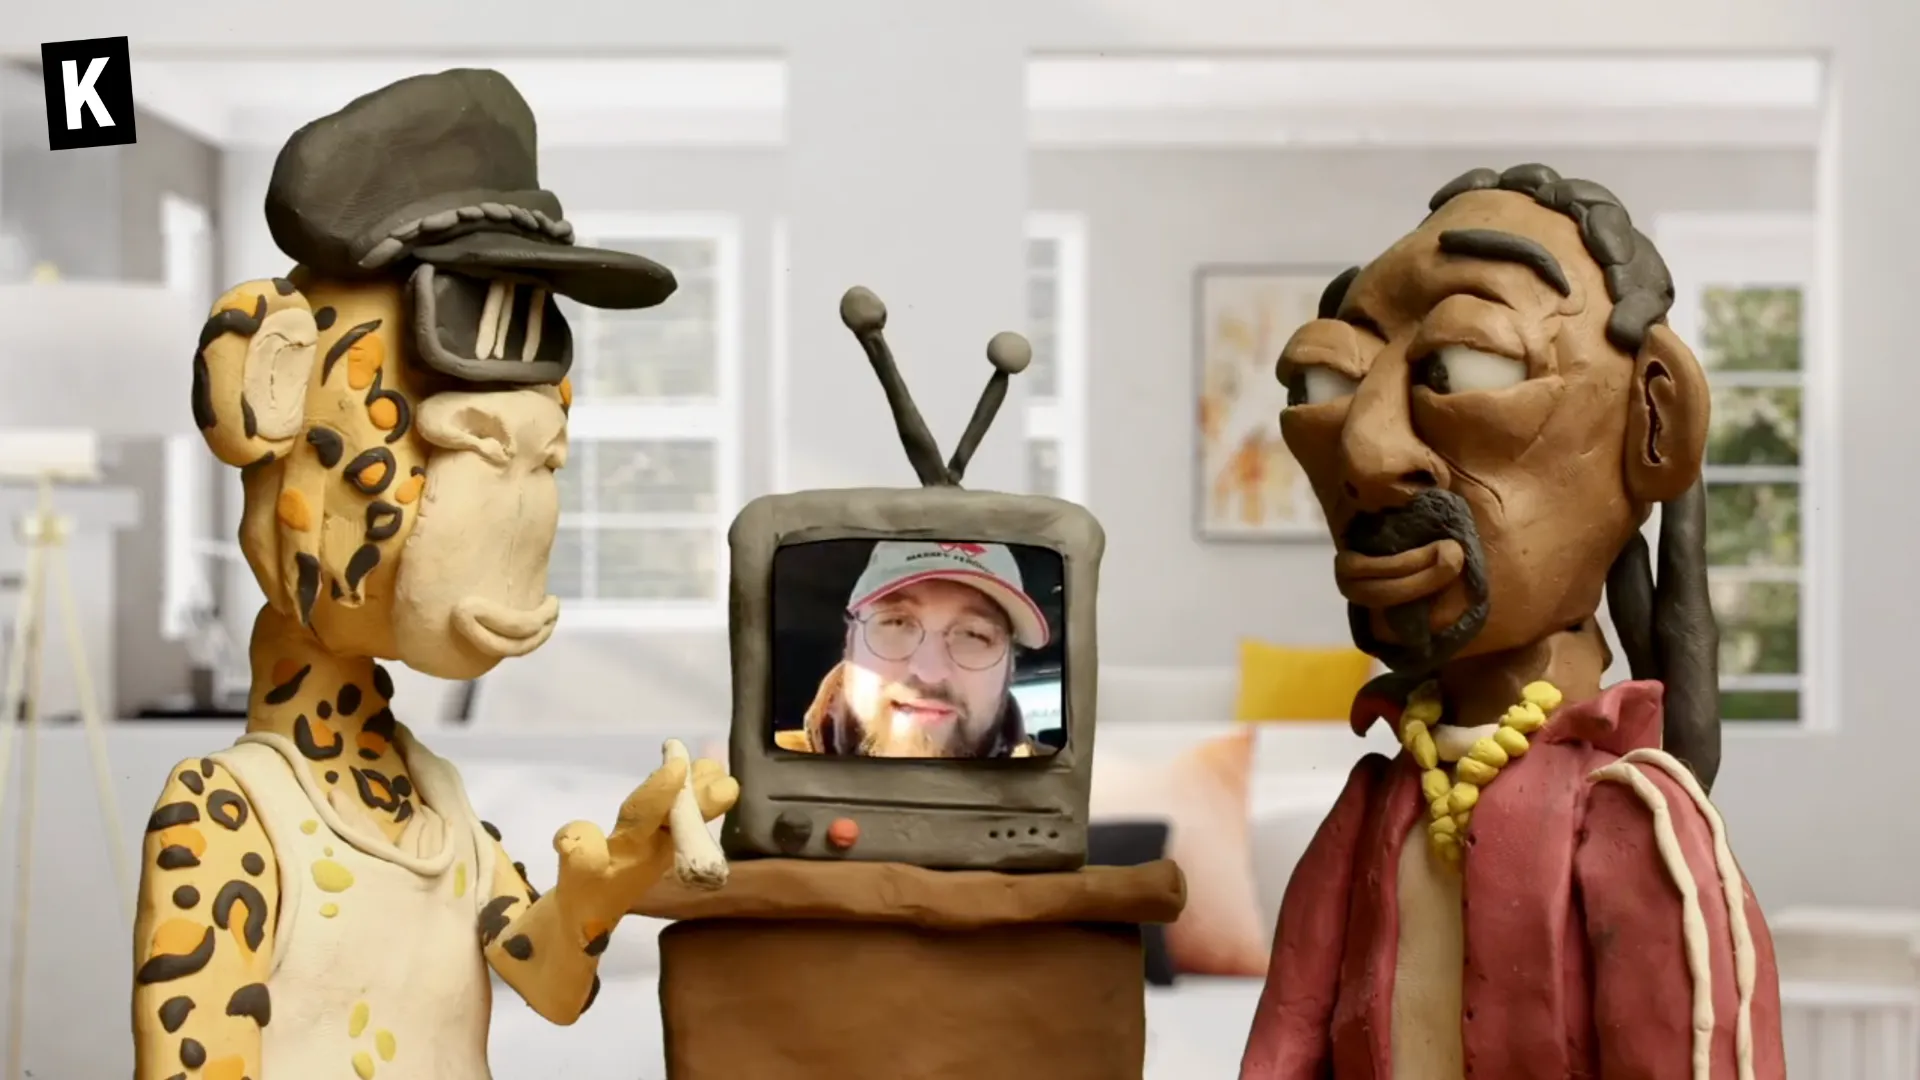 Clay representation of Snoop Doog with an Ape